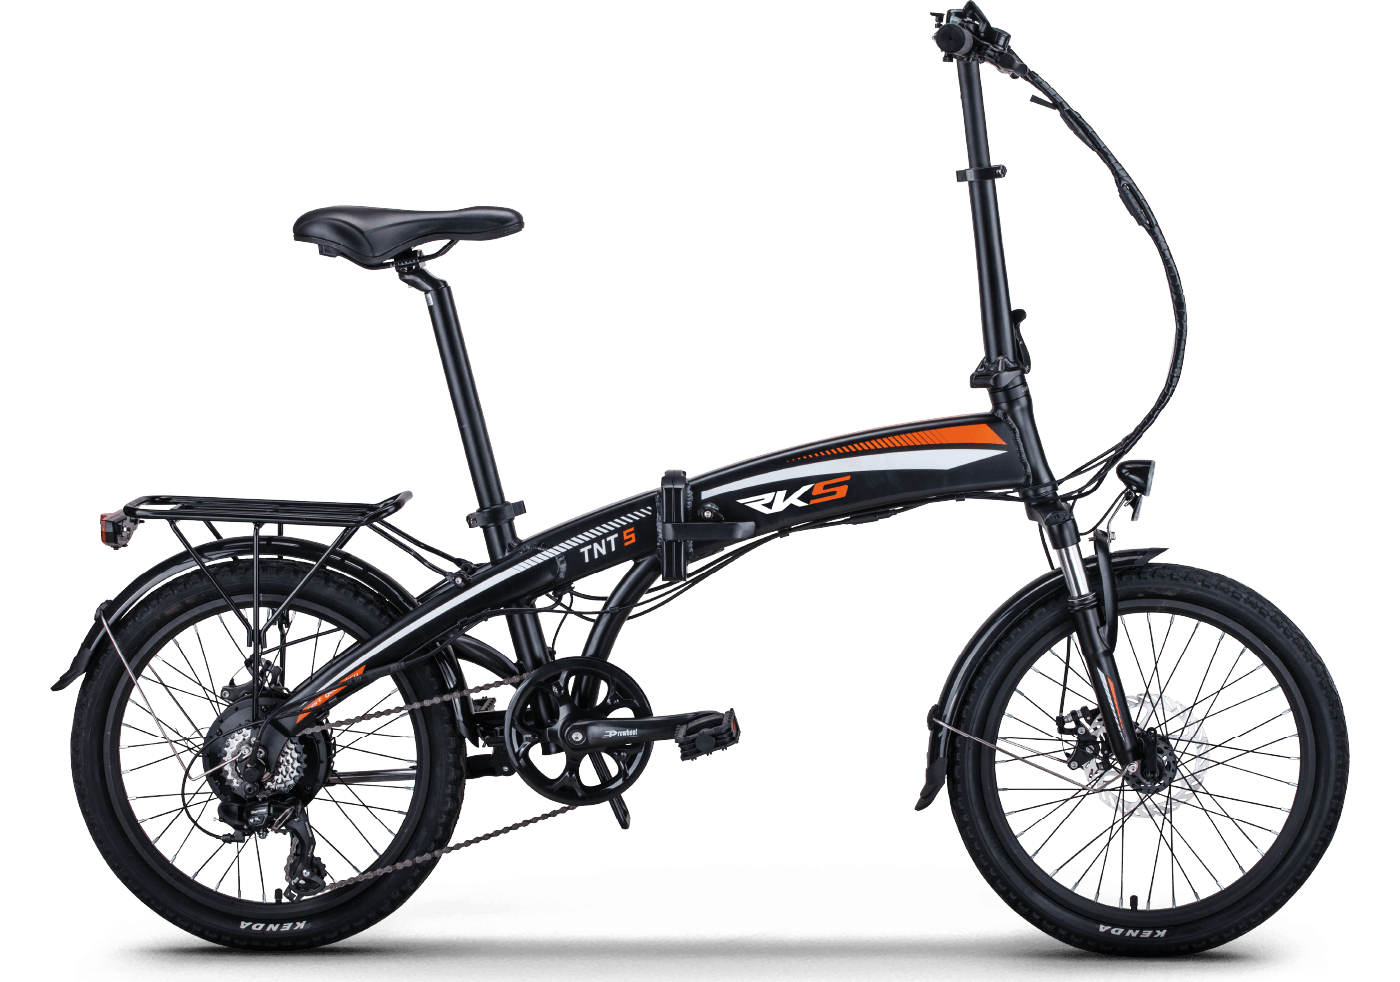 RKS Електричен велосипед TNT 5 PRO